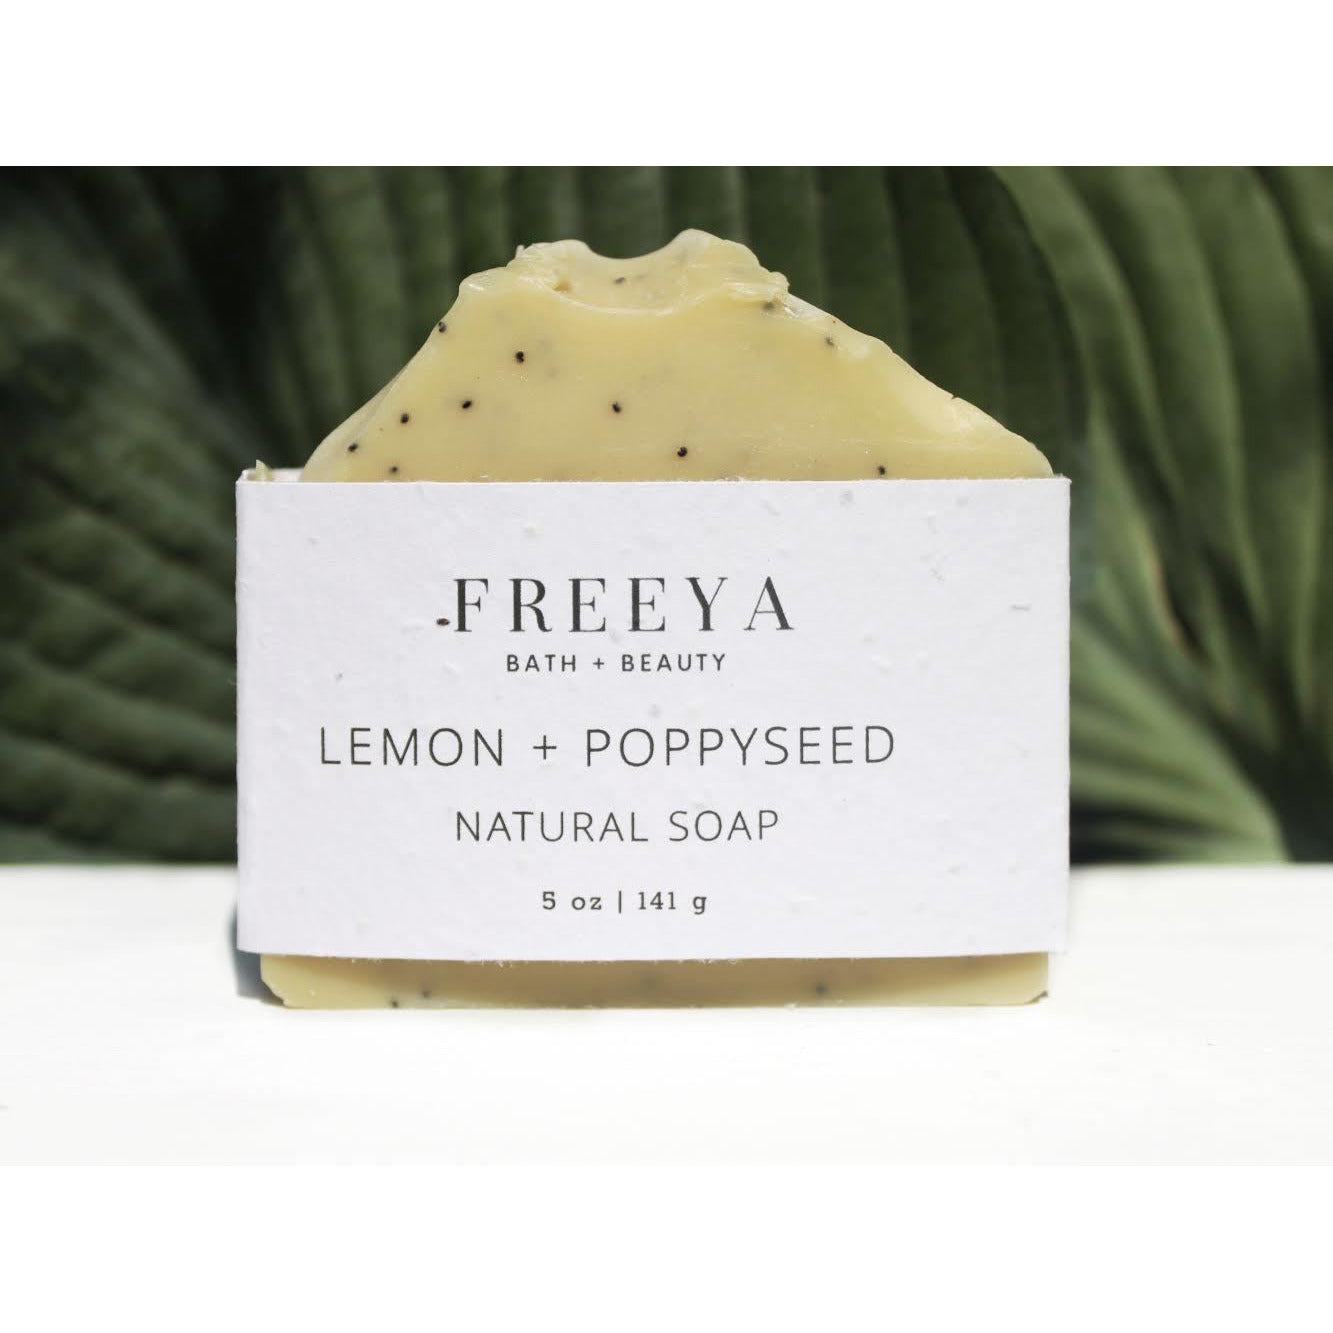 lemon and poppyseed natural soap